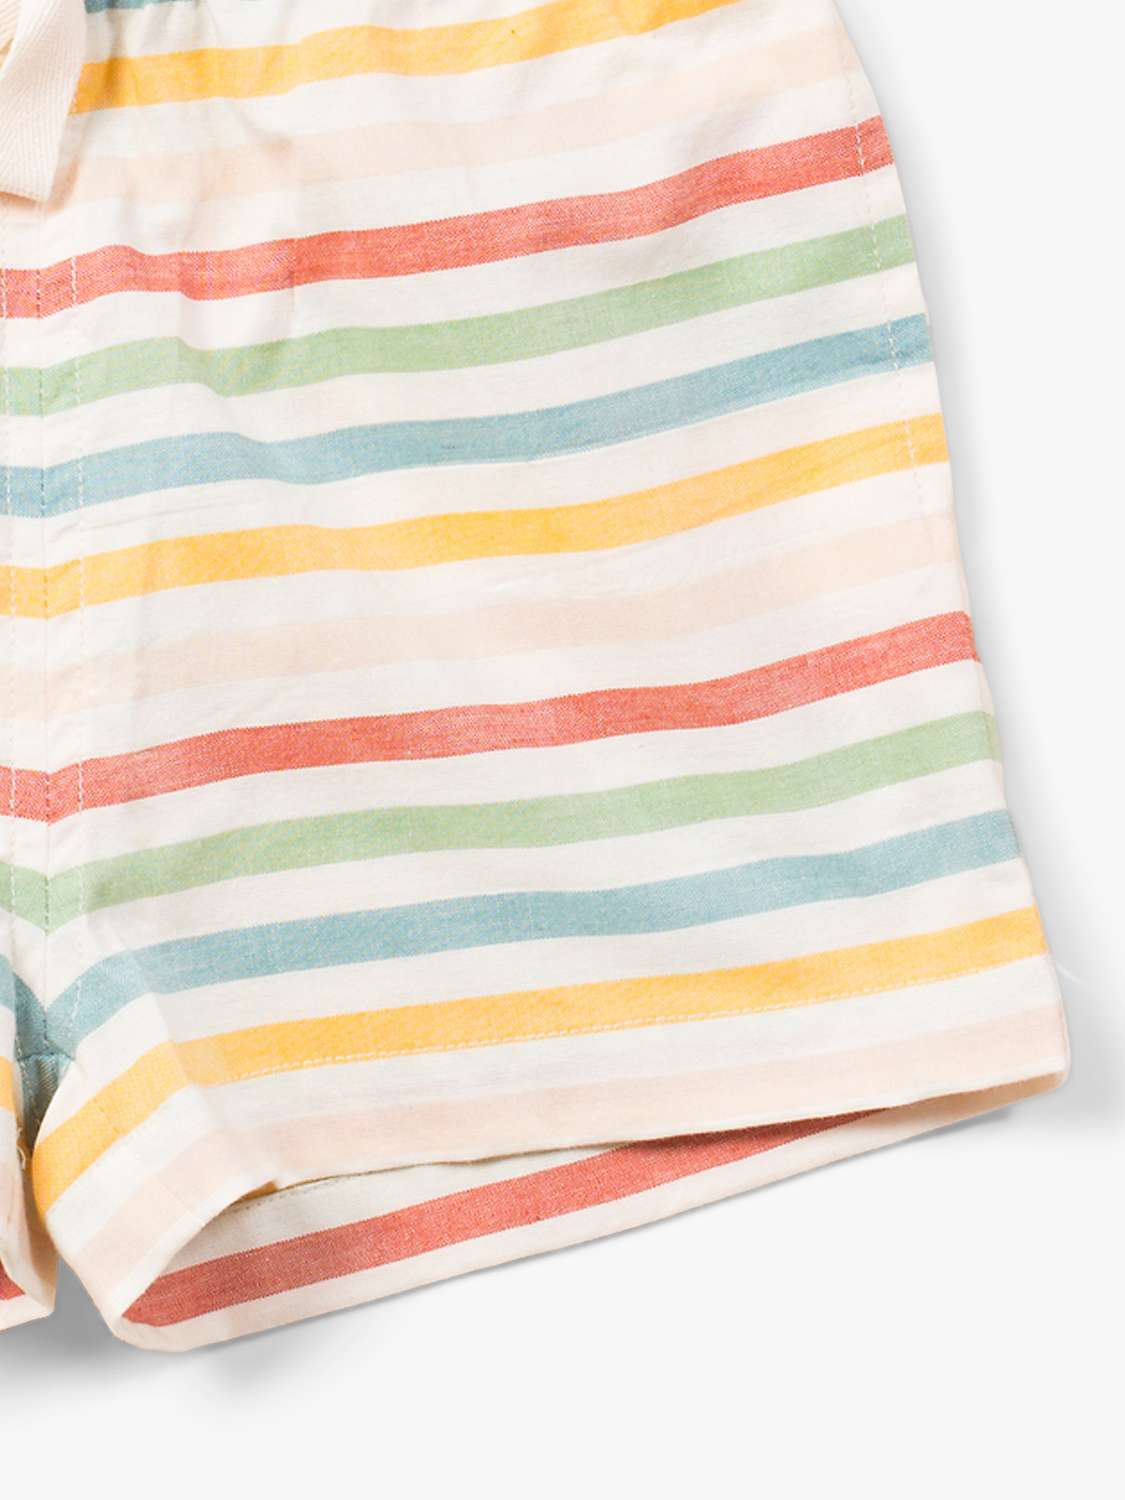 Buy Little Green Radicals Baby Organic Cotton Rainbow Striped Shorts, Multi Online at johnlewis.com